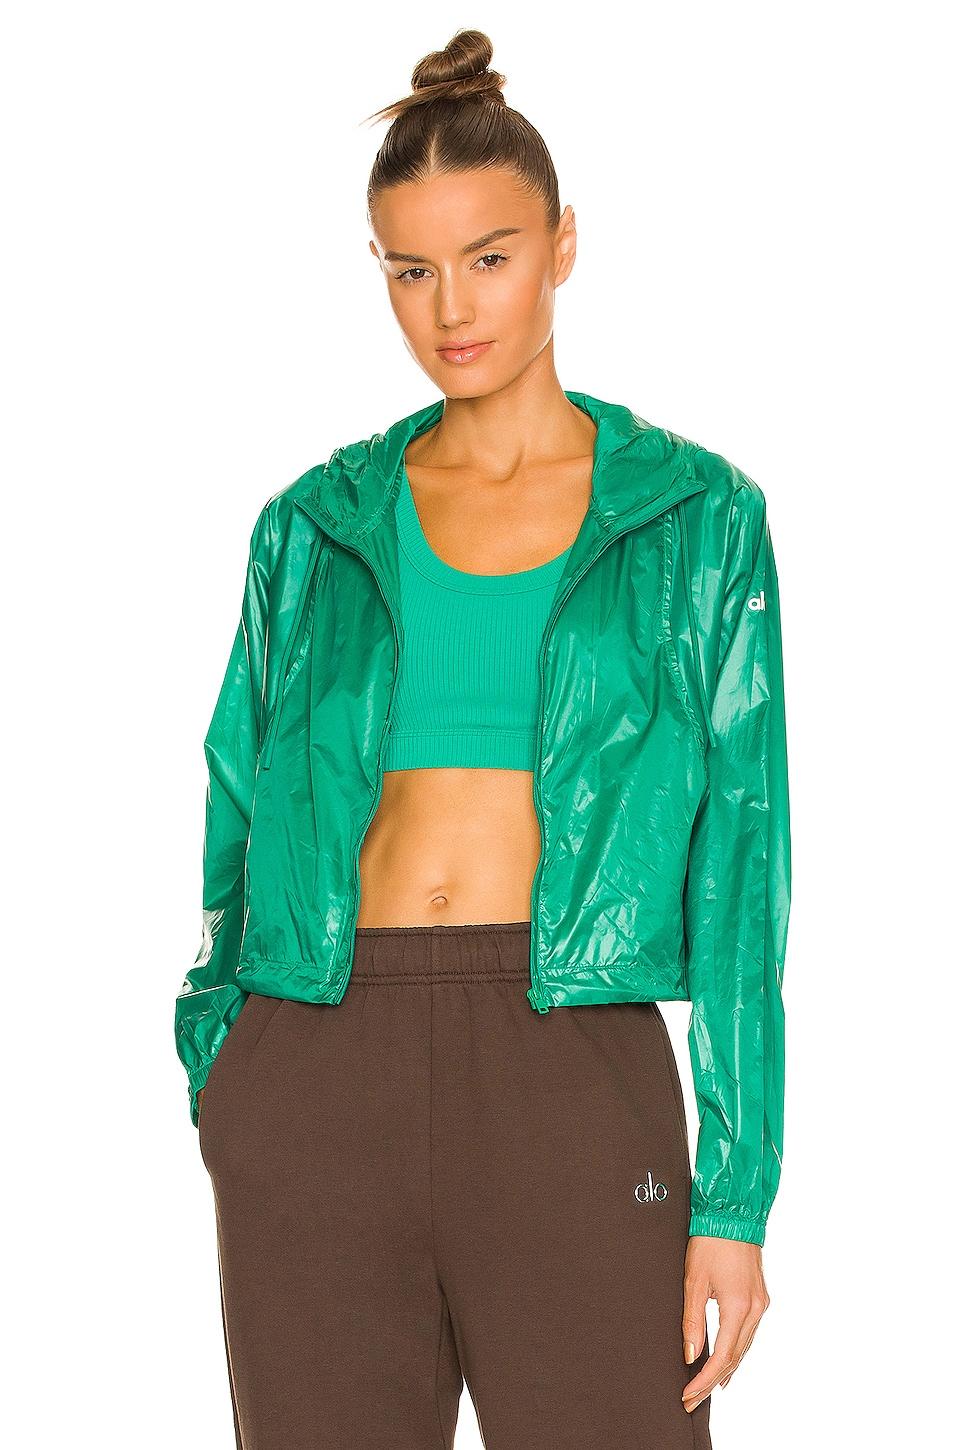 Alo Yoga Sprinter Jacket in Green